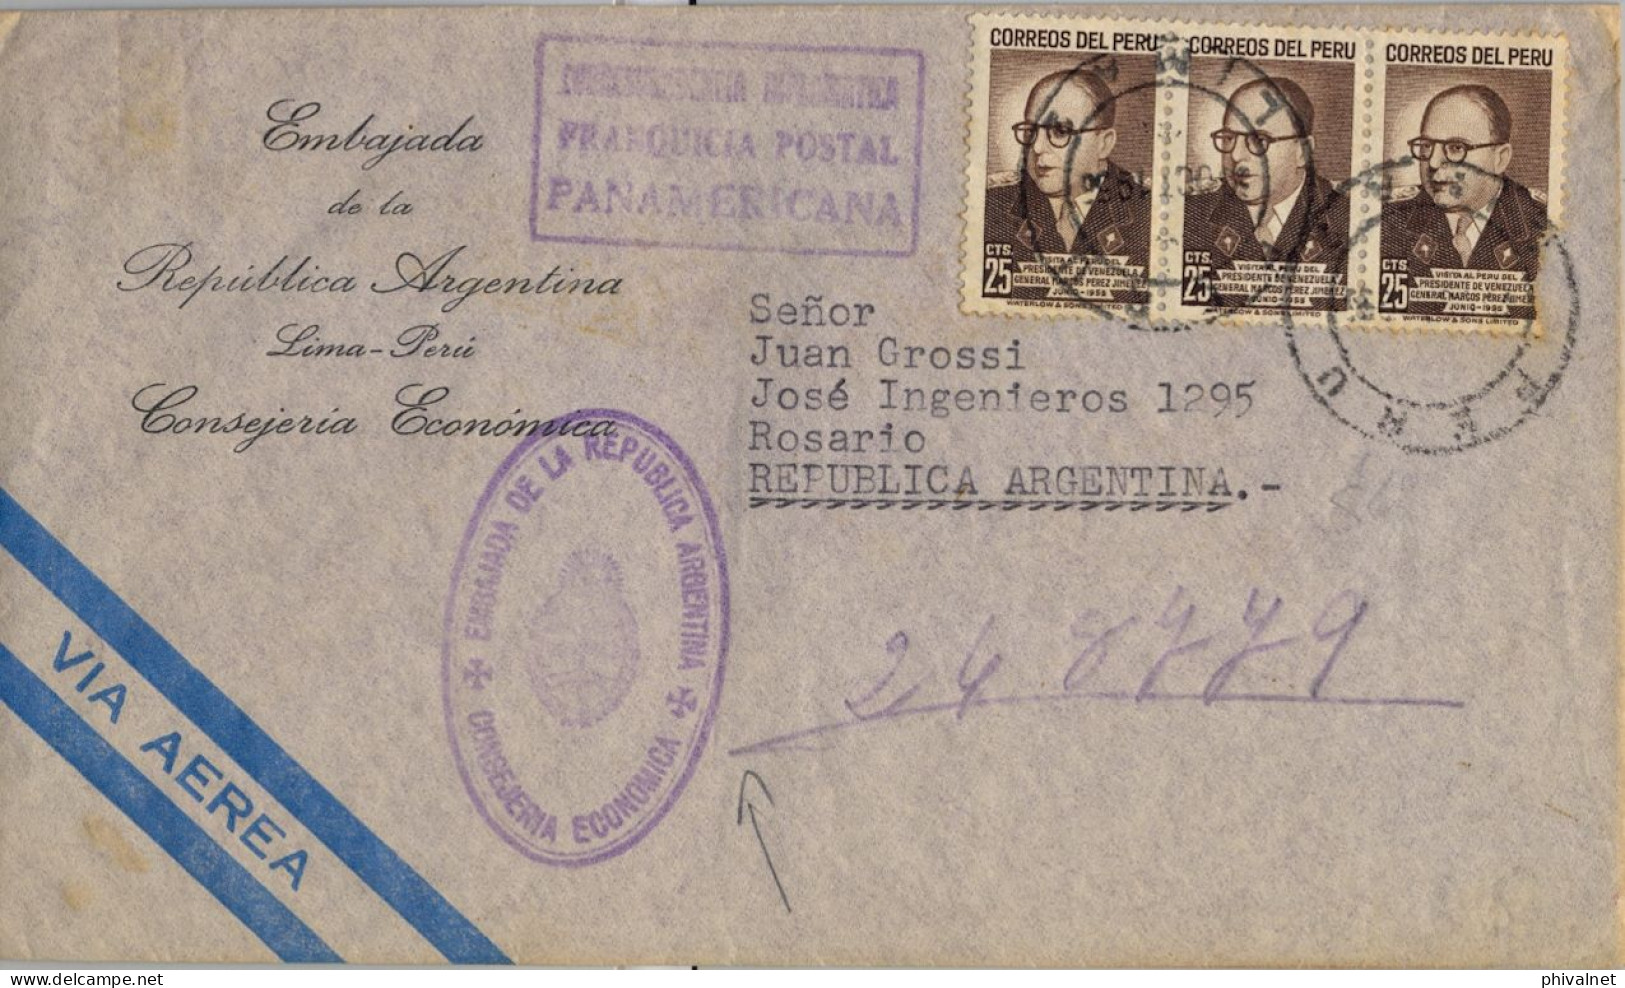 1956 PERÚ , CORREO CONSULAR , CORRESPONDENCIA DIPLOMÁTICA , FRANQUICIA POSTAL PANAMERICANA , CONSEJERIA ECONÓMICA - Perú